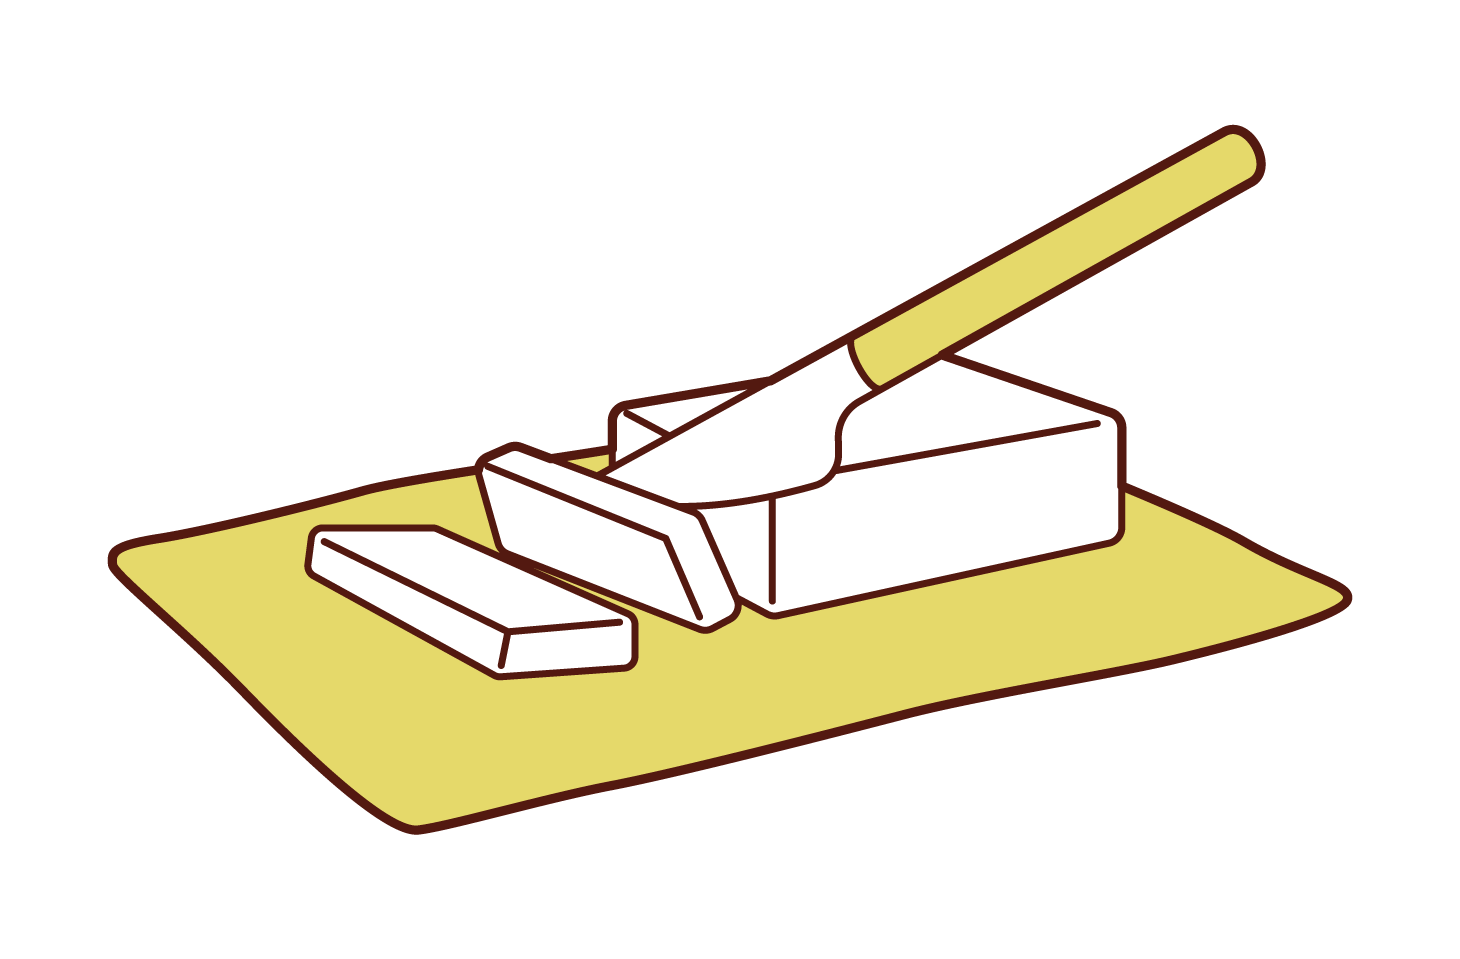 Illustration of butter